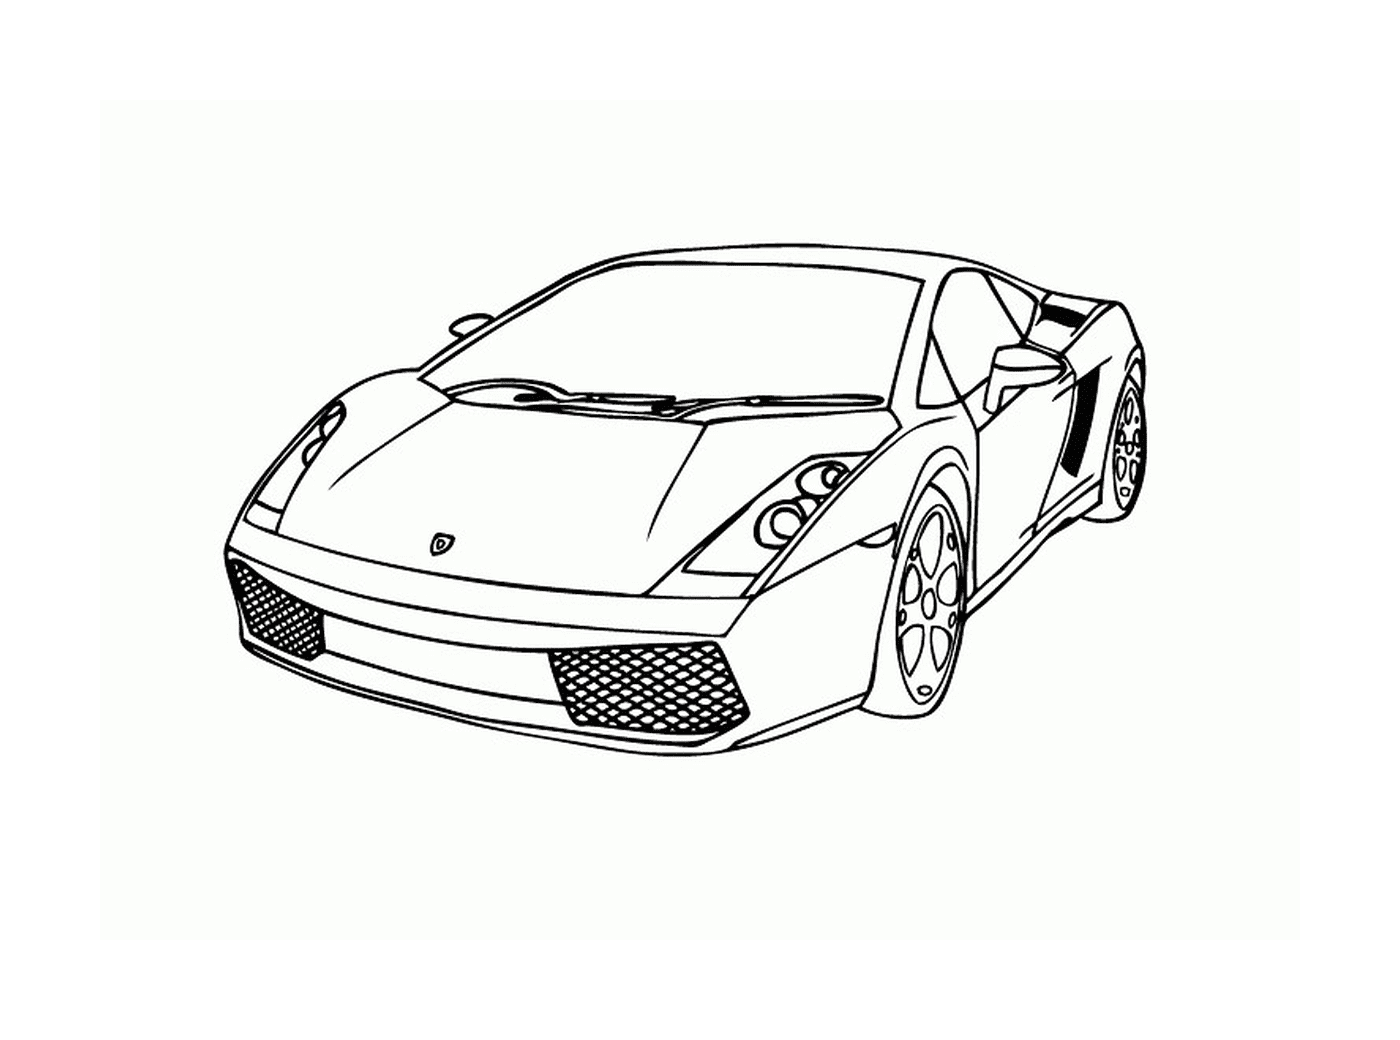  Lamborghini cars, top view 